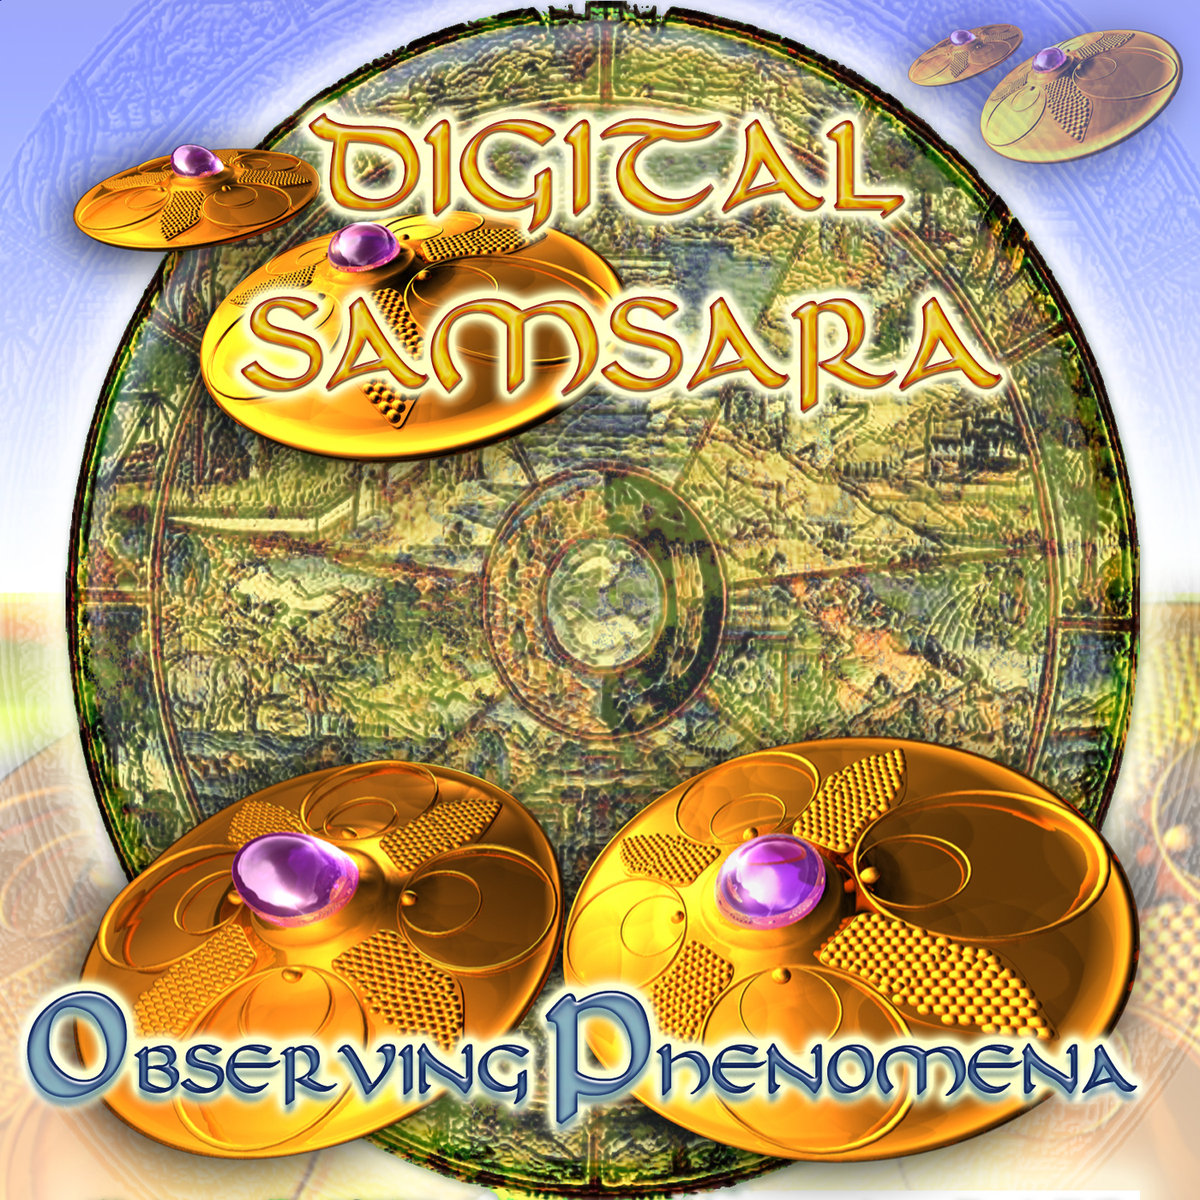 Digital Samsara - Space Kozak @ 'Observing Phenomena' album (electronic, goa)